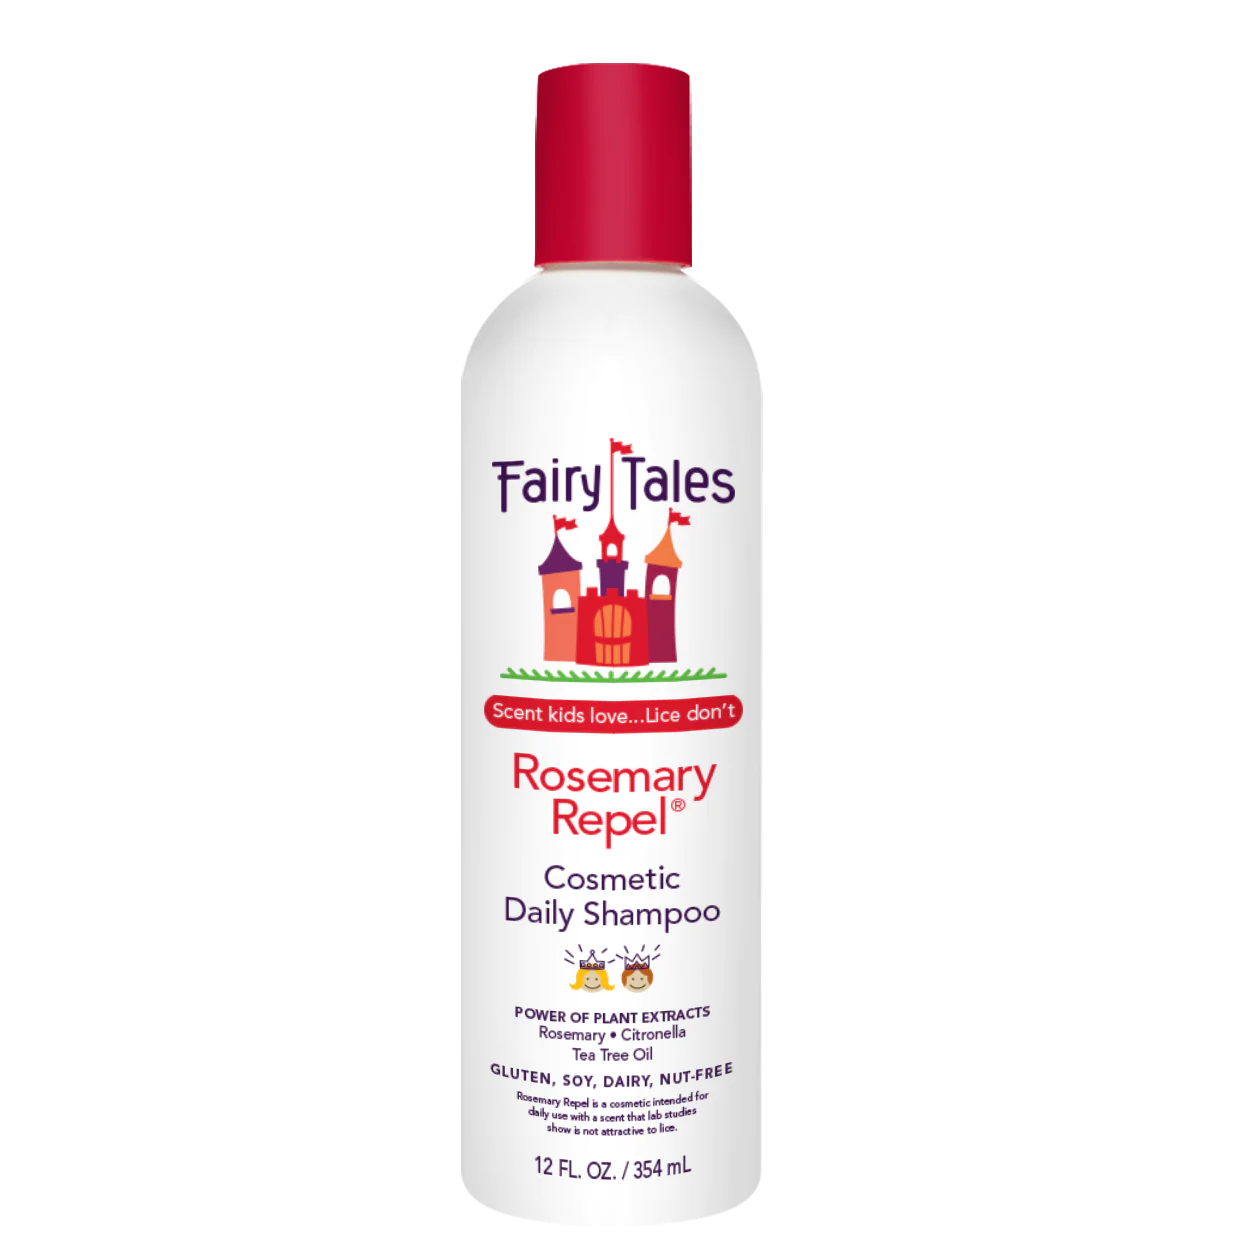 Fairy Tales Lice Prevention Rosemary Repel Shampoo